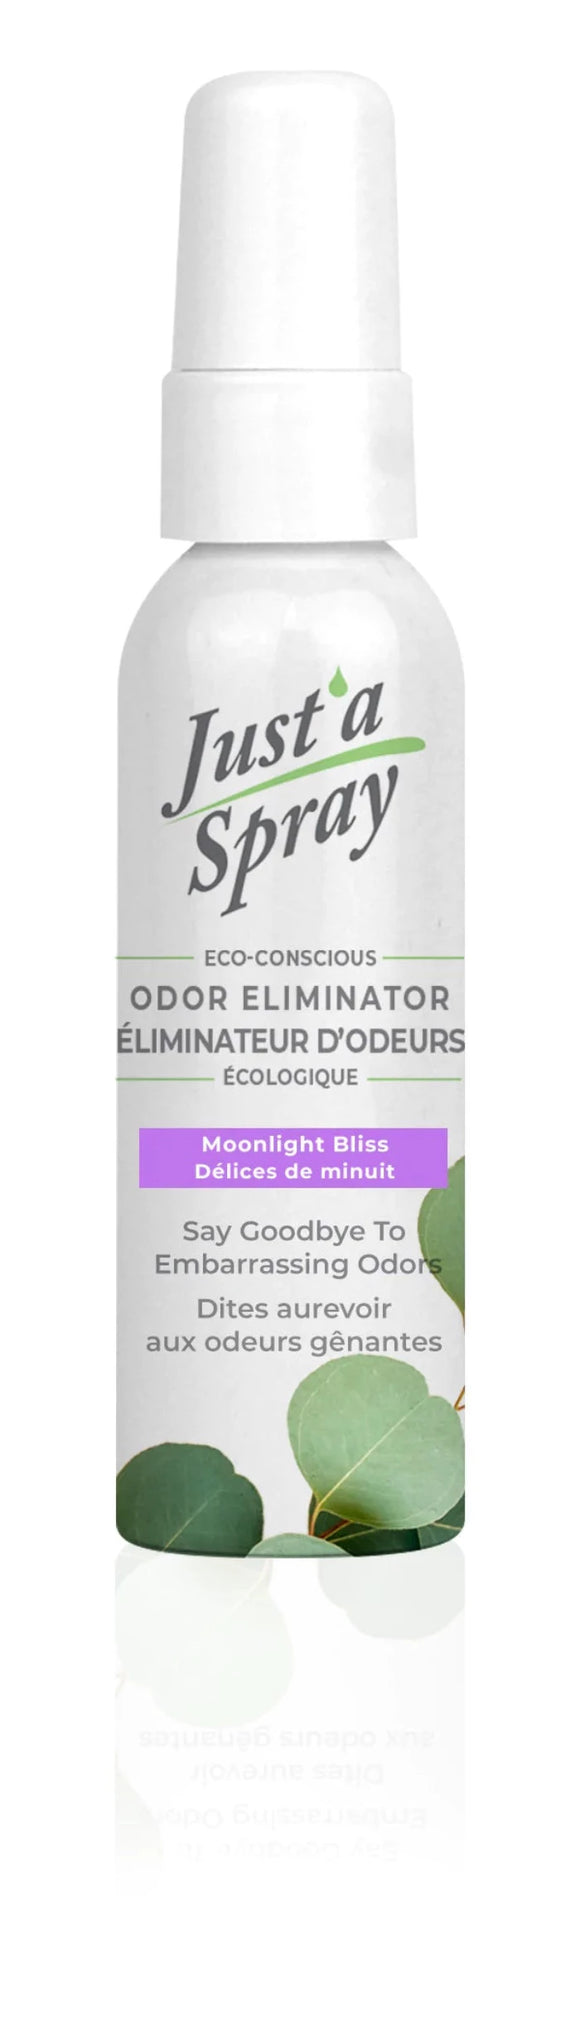 Just A Spray Toilet Odor Eliminator 55 ml